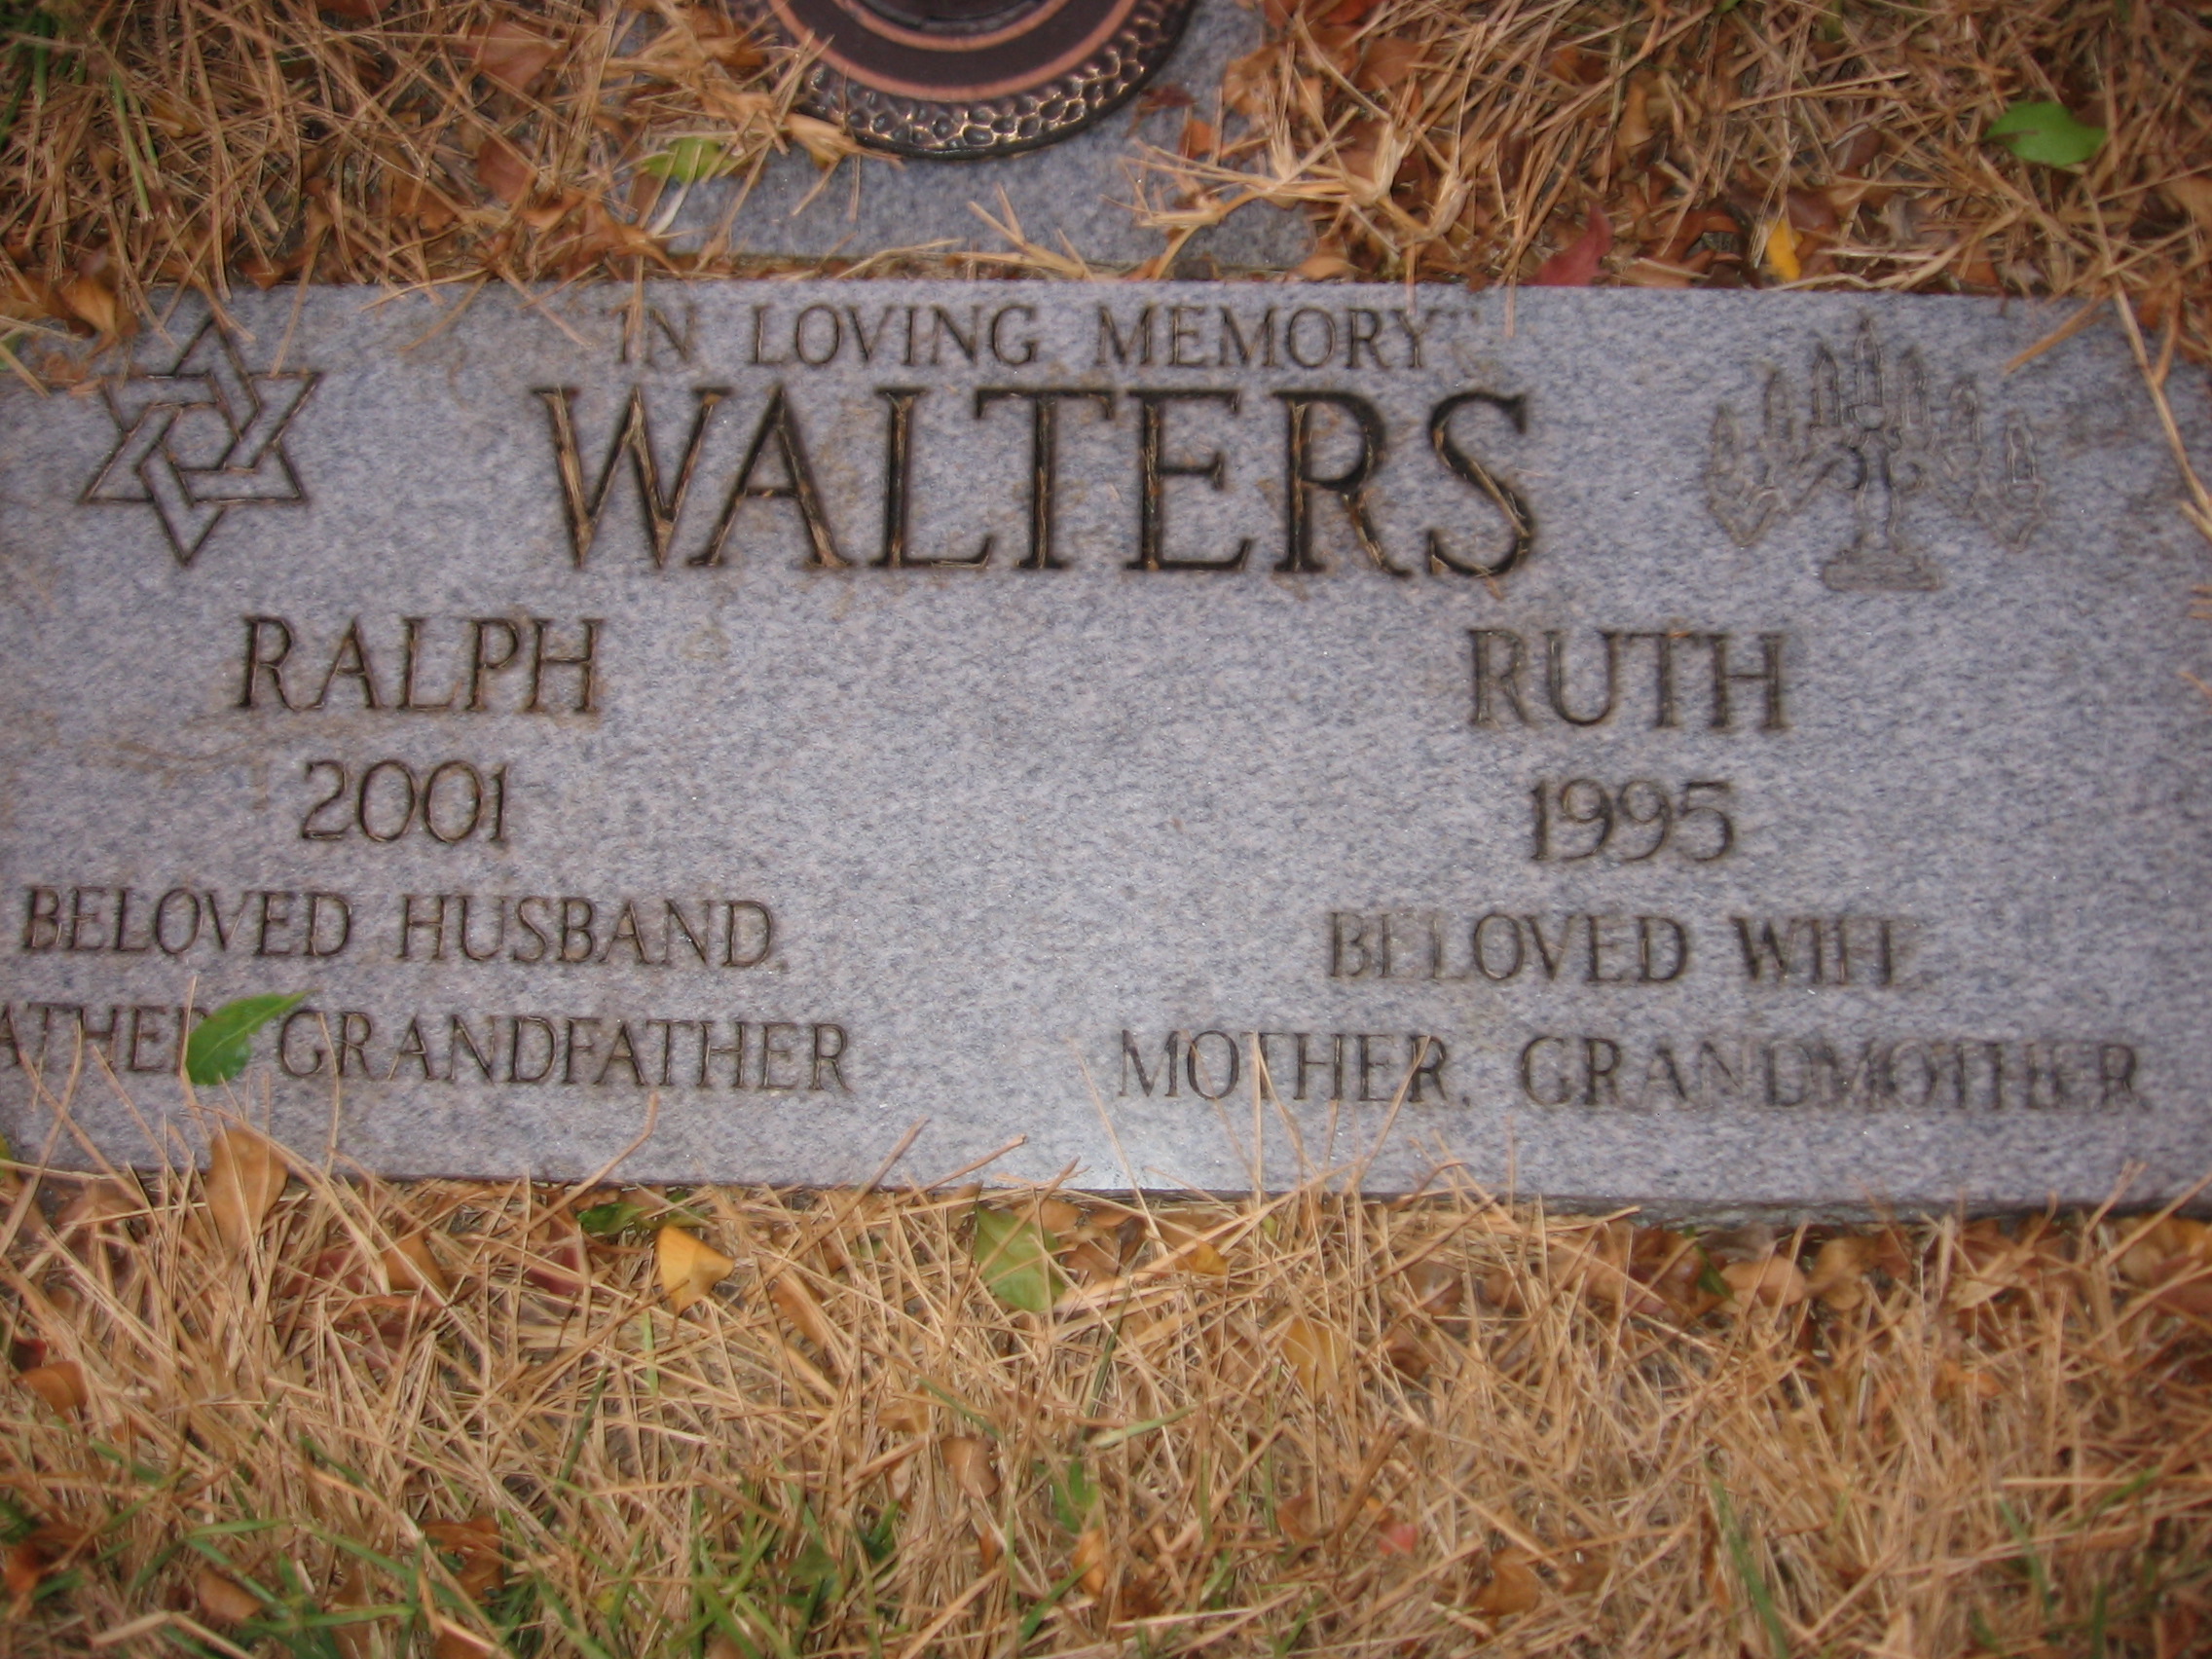 Ralph Walters